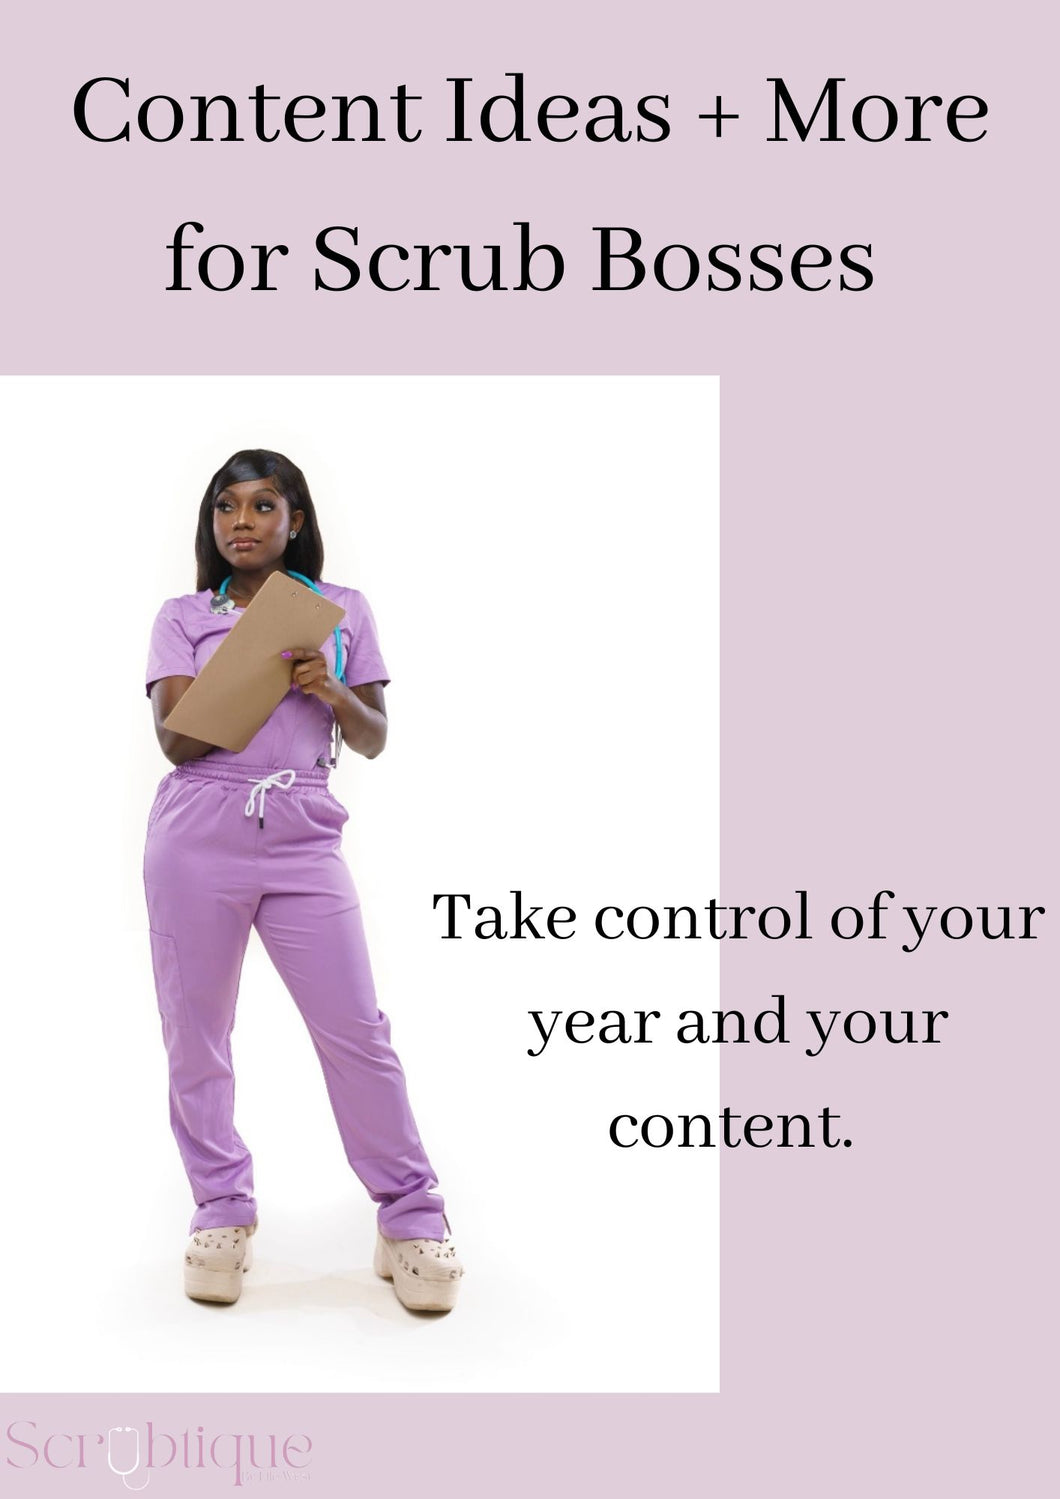 Content Help for Scrub Bosses w/ Scrub Businesses